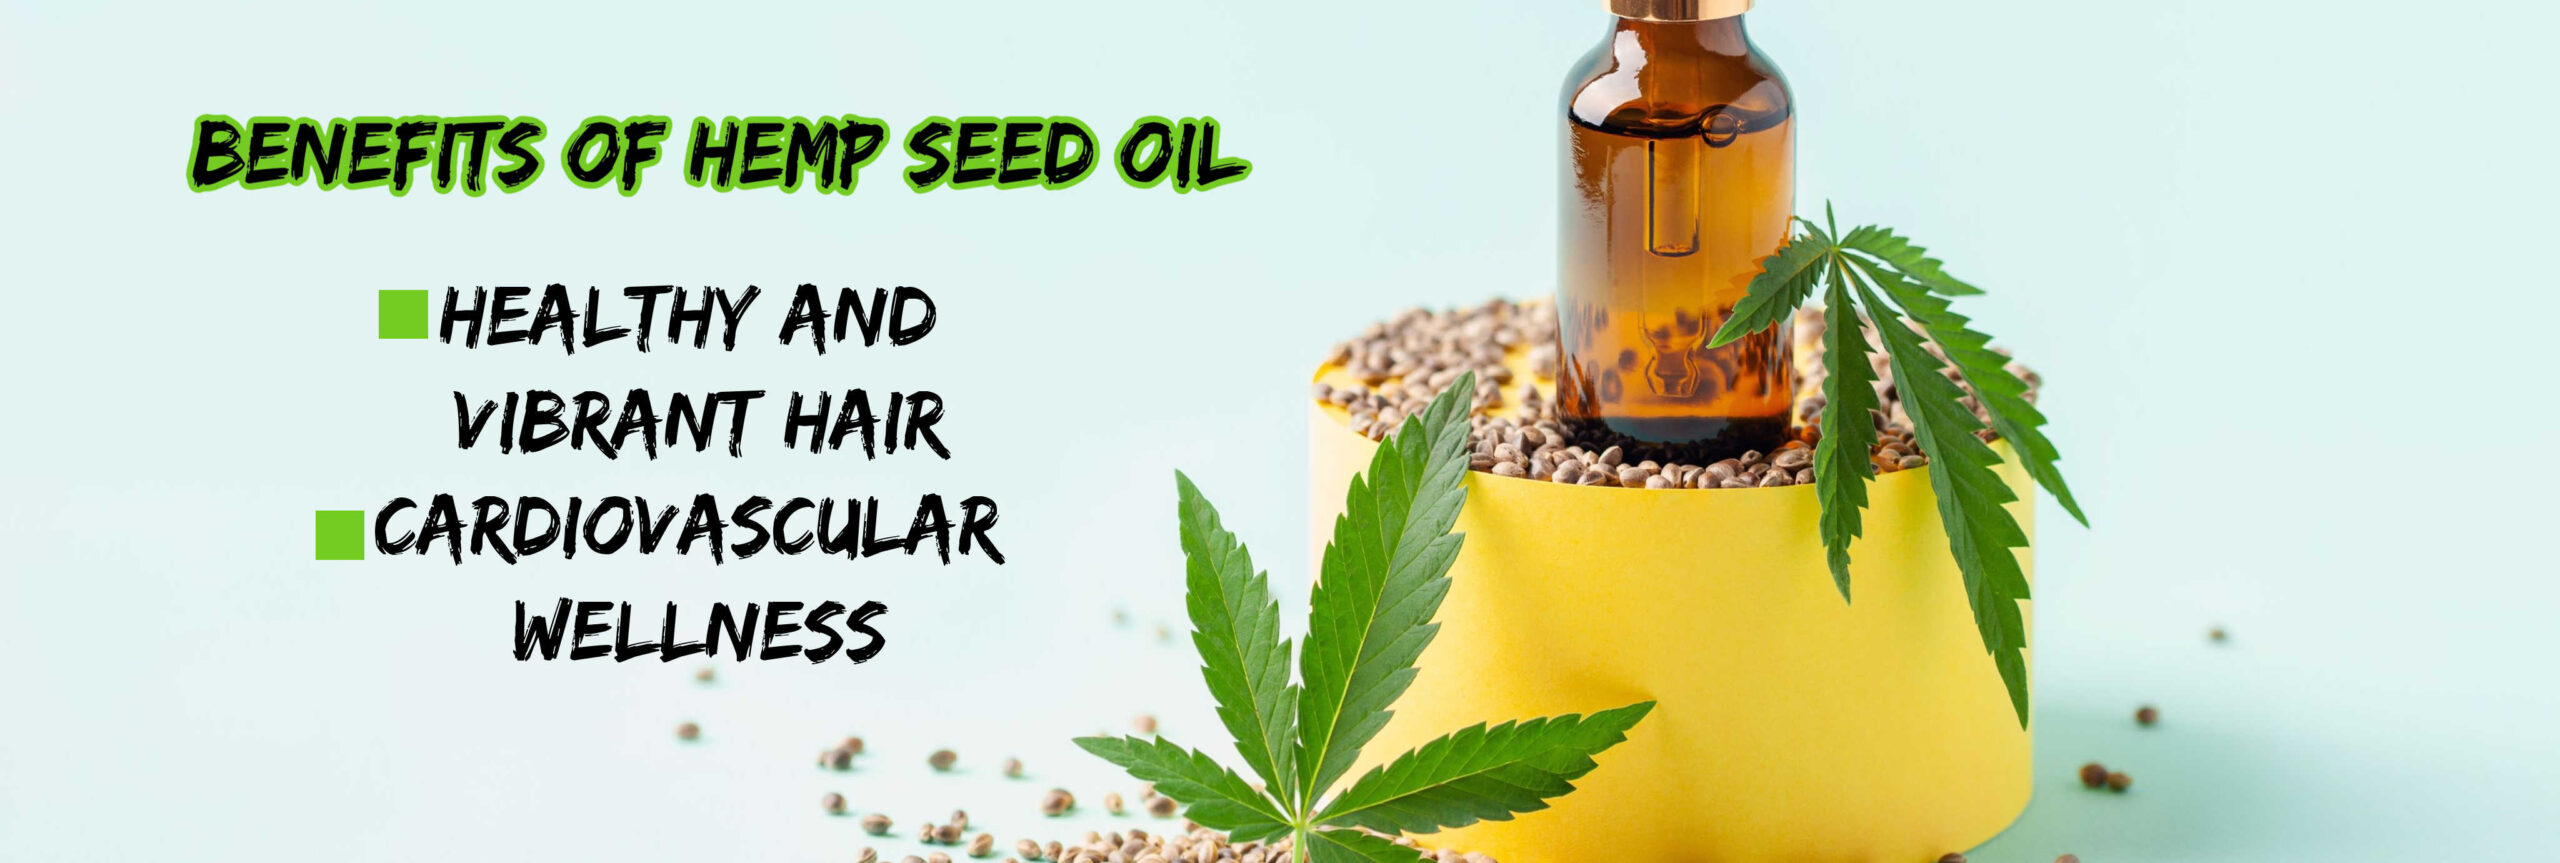 image of hemp seed oil benefits